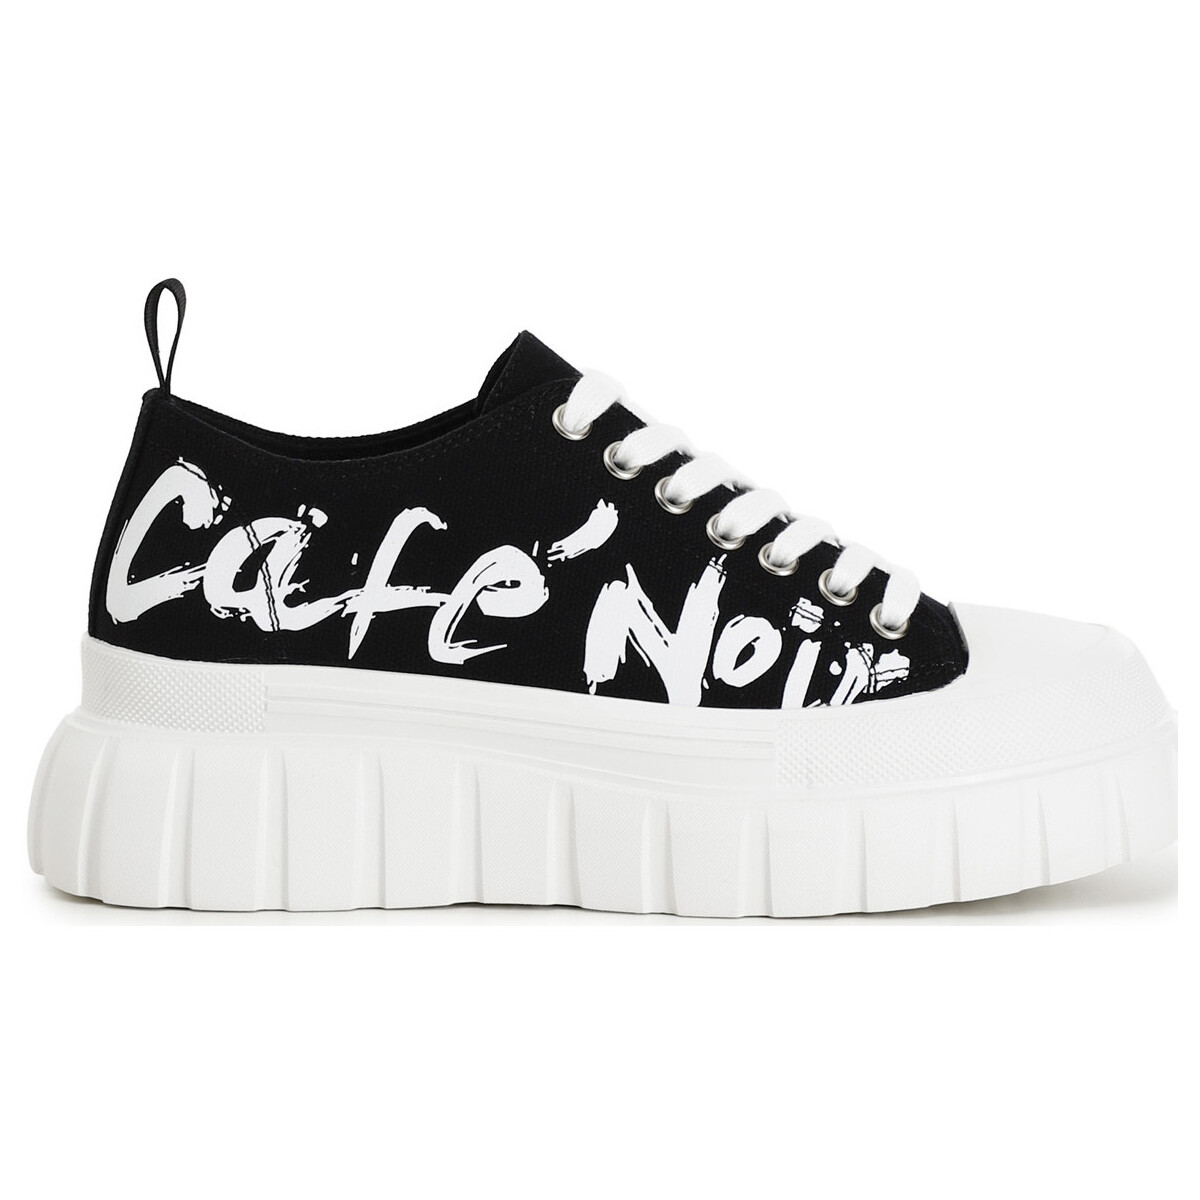 Schoenen Dames Lage sneakers Café Noir C1DG9320 Zwart